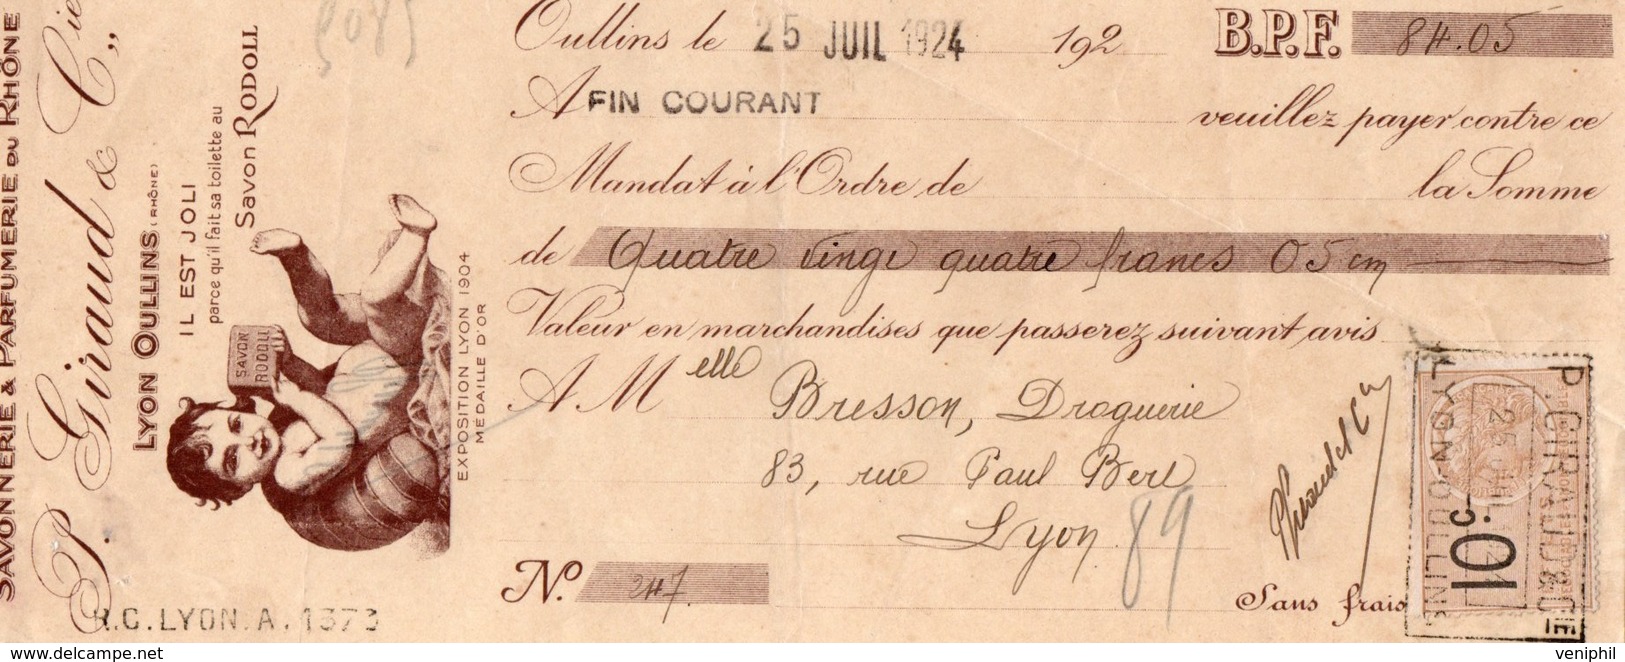 LETTRE DE CHANGE - SAVONNERIE- PARFUMERIE DU RHONE - P.GIRAUD -LYON OULLINS -1924 - Bills Of Exchange